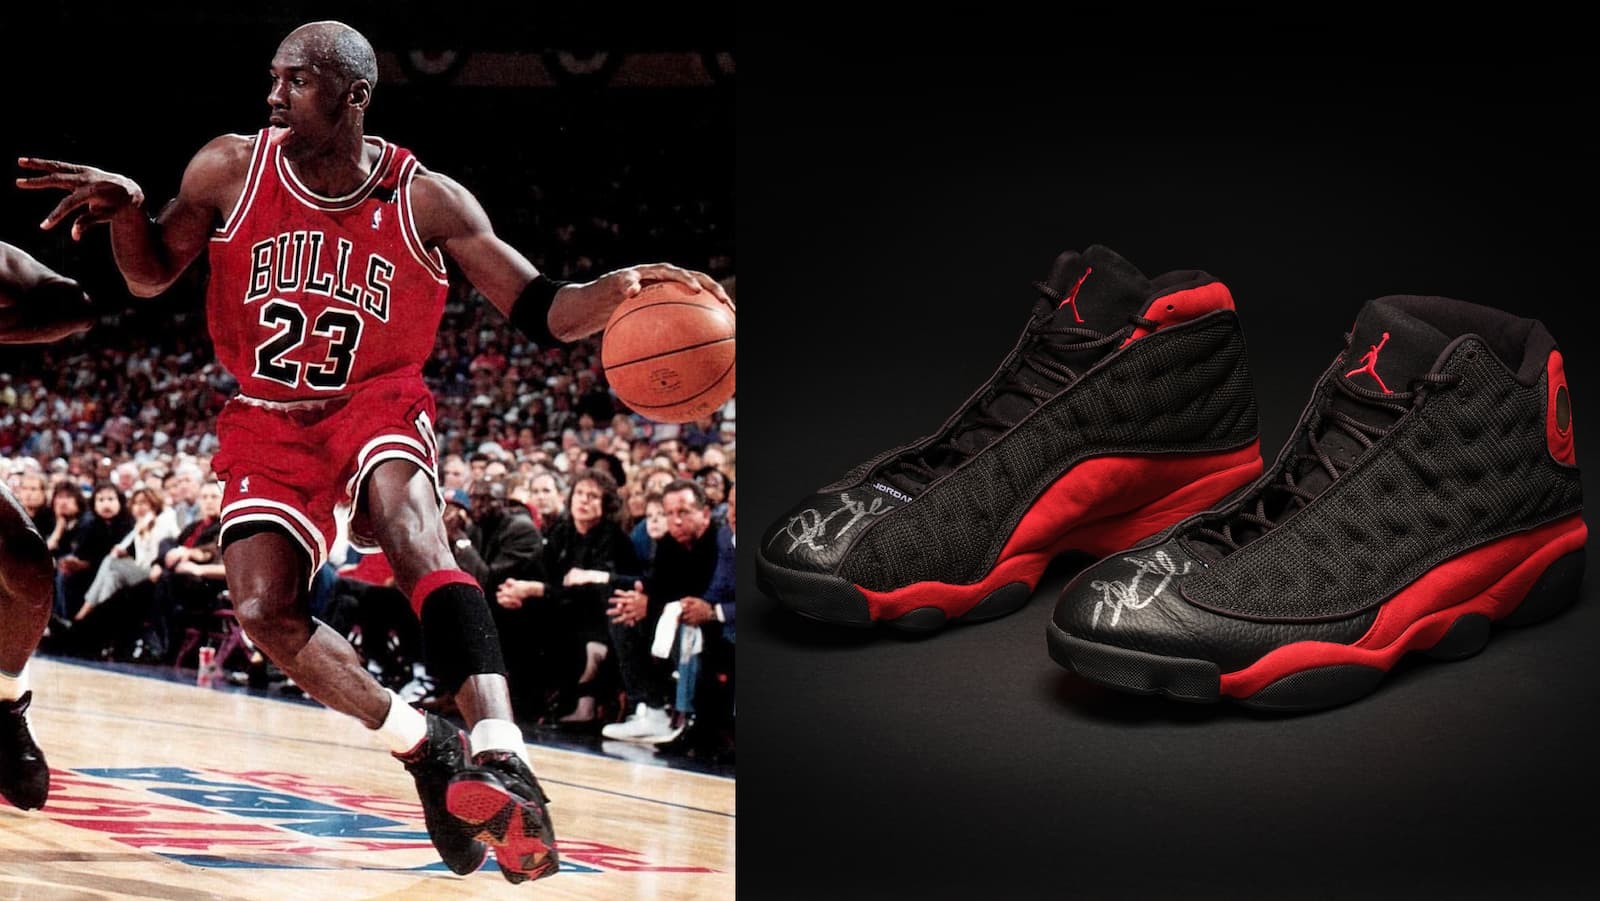 Michael Jordan's Air Jordan shoes from rookie season just sold for